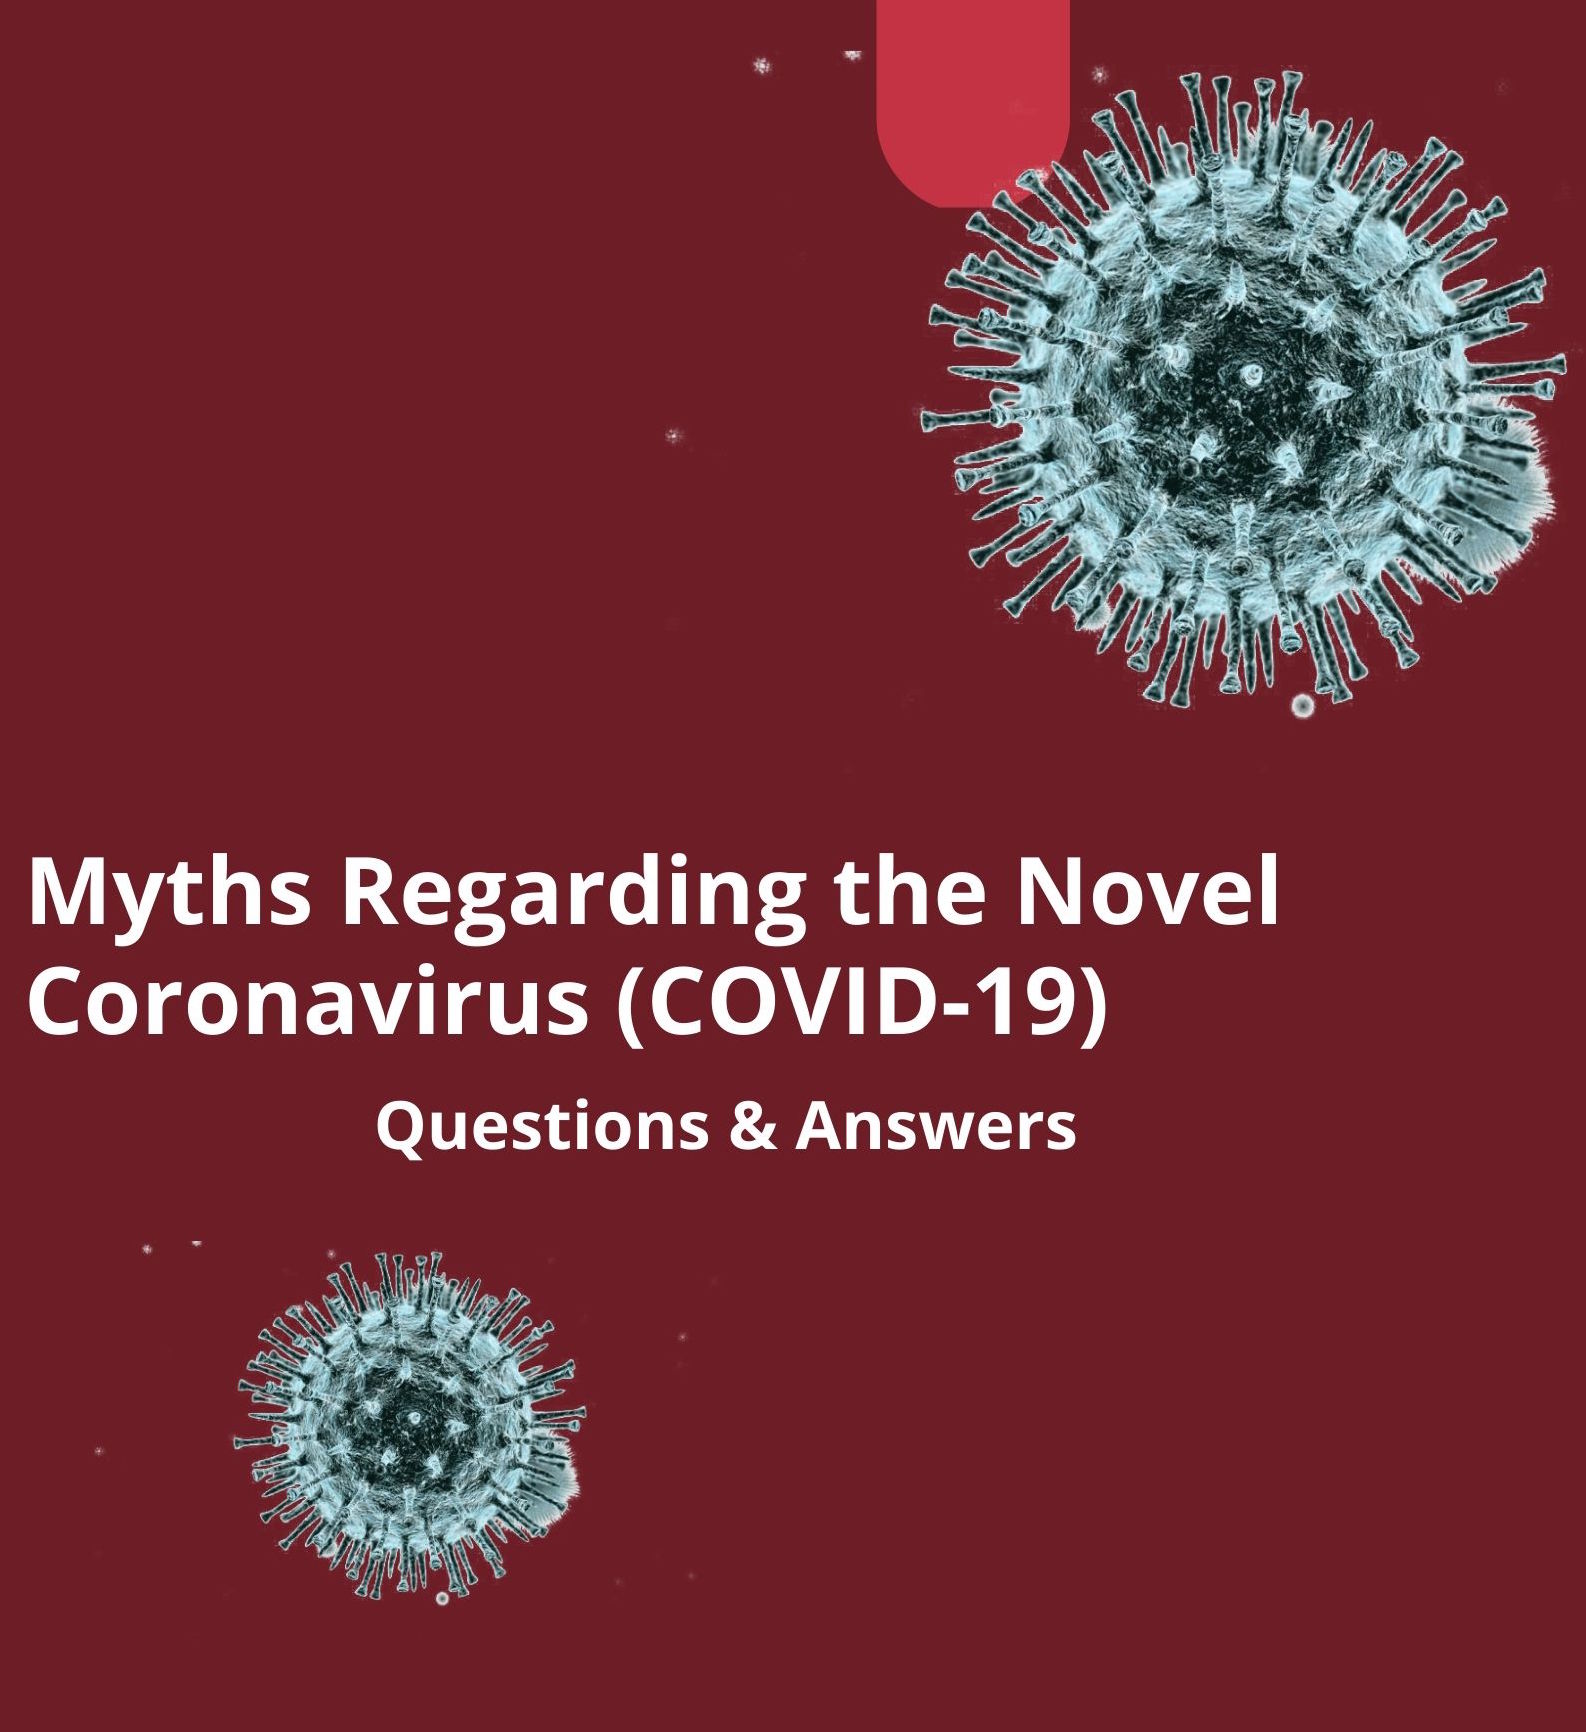 Incorrect recommendations or information regarding the Novel Coronavirus (COVID-19)